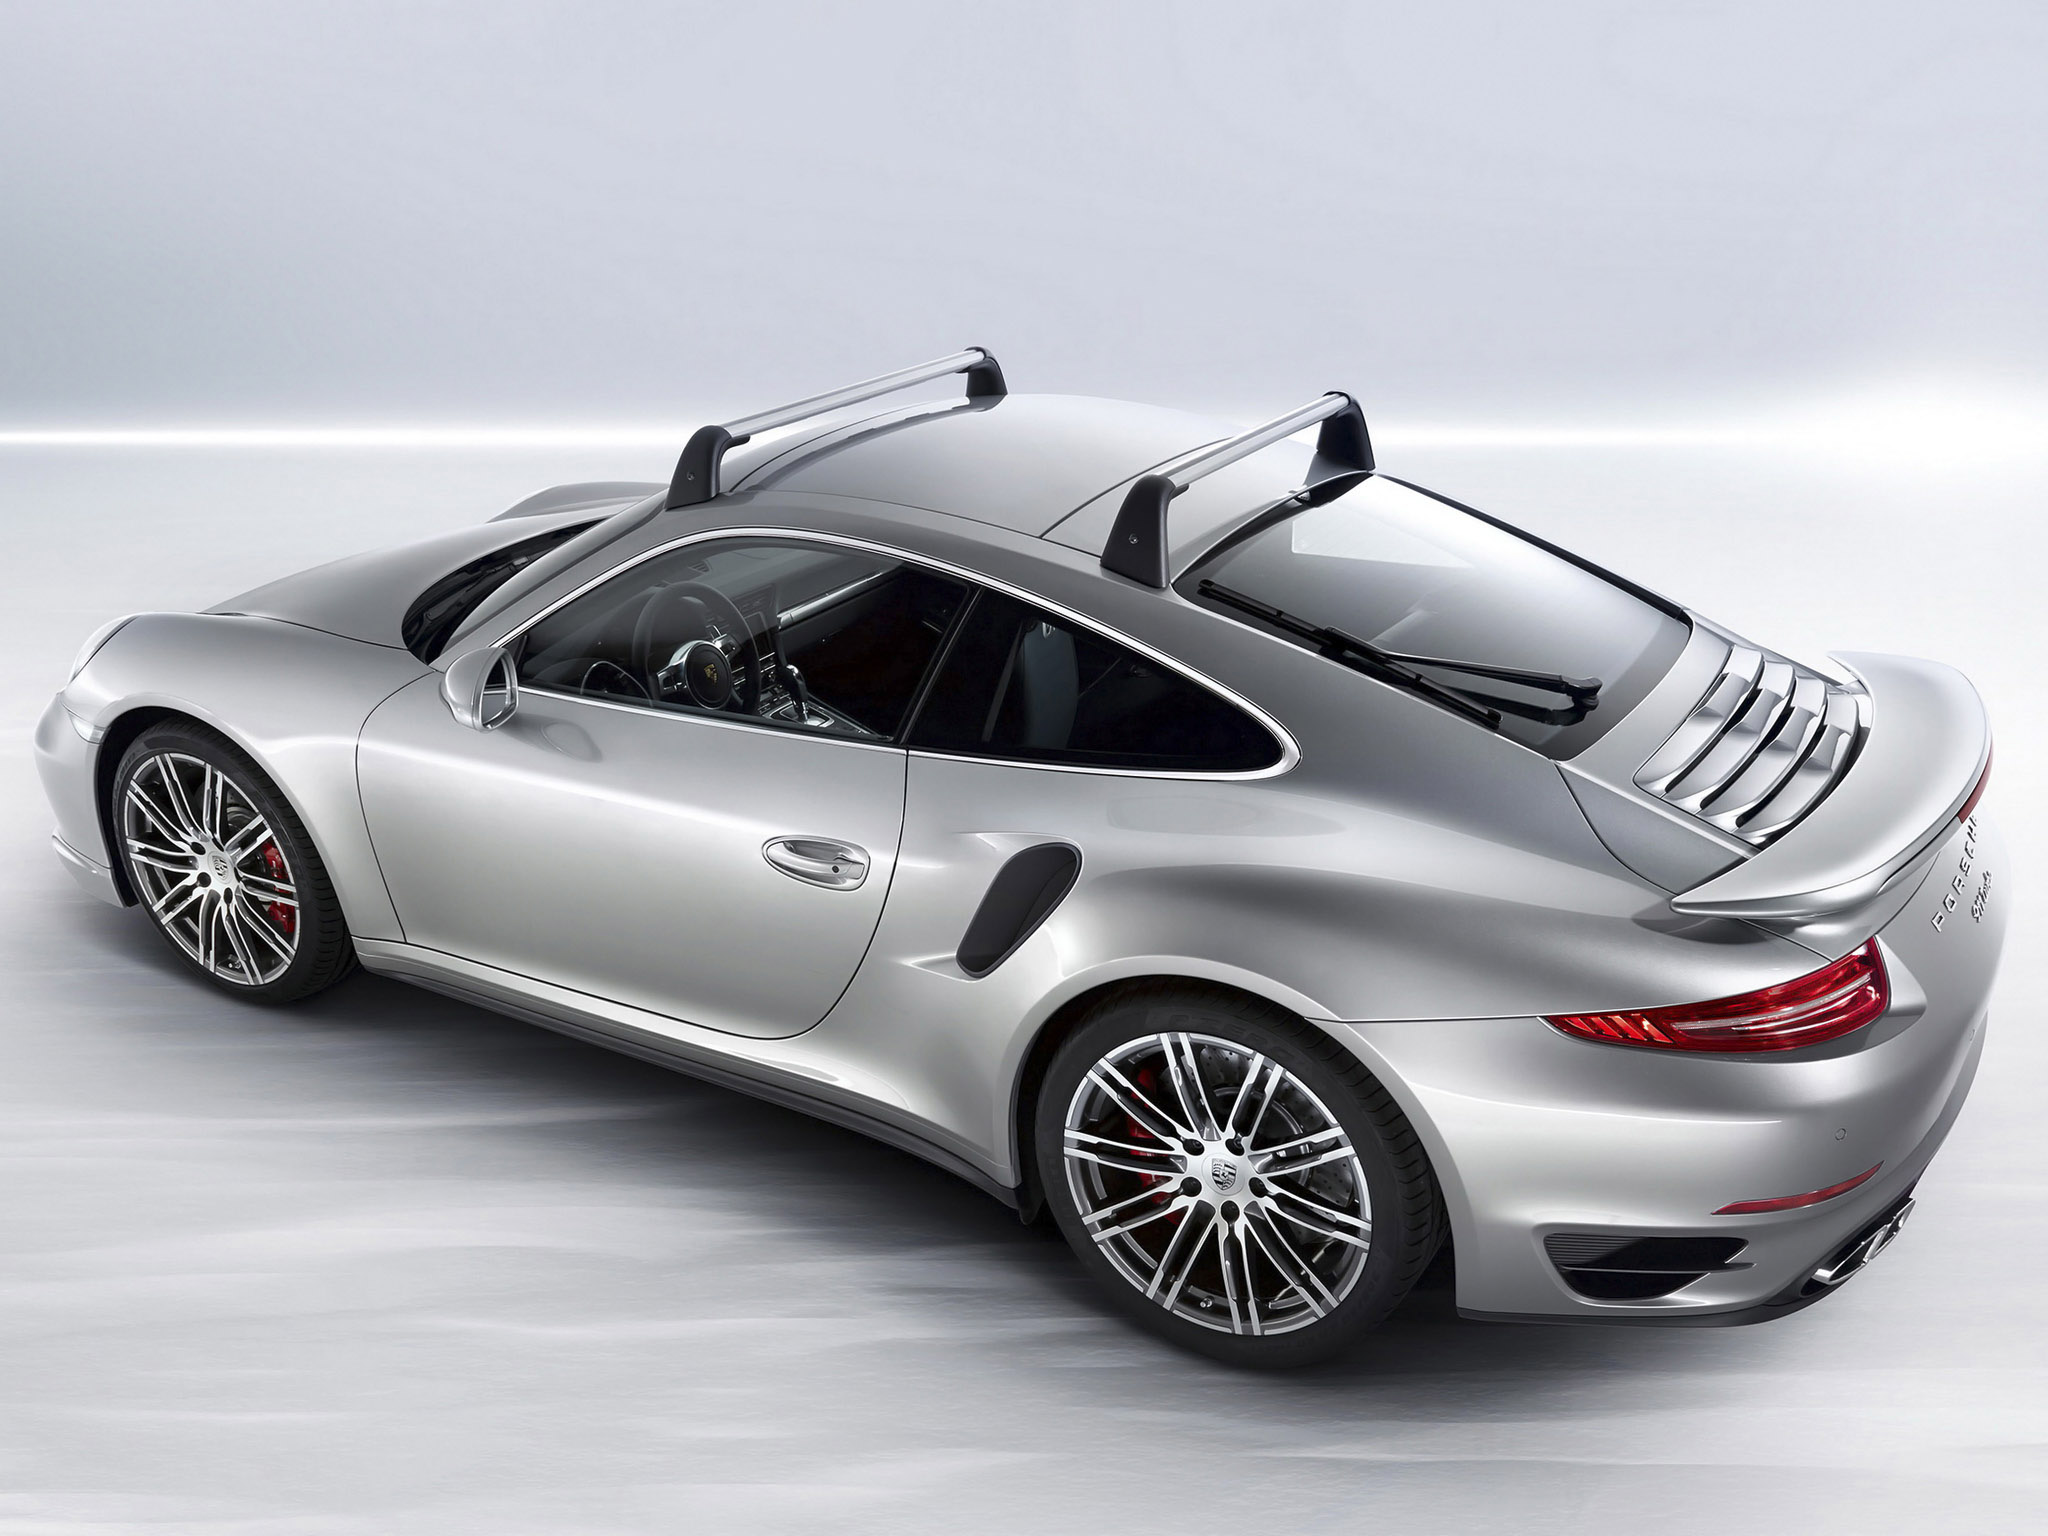 2013, Porsche, 911, Turbo, 991 Wallpaper